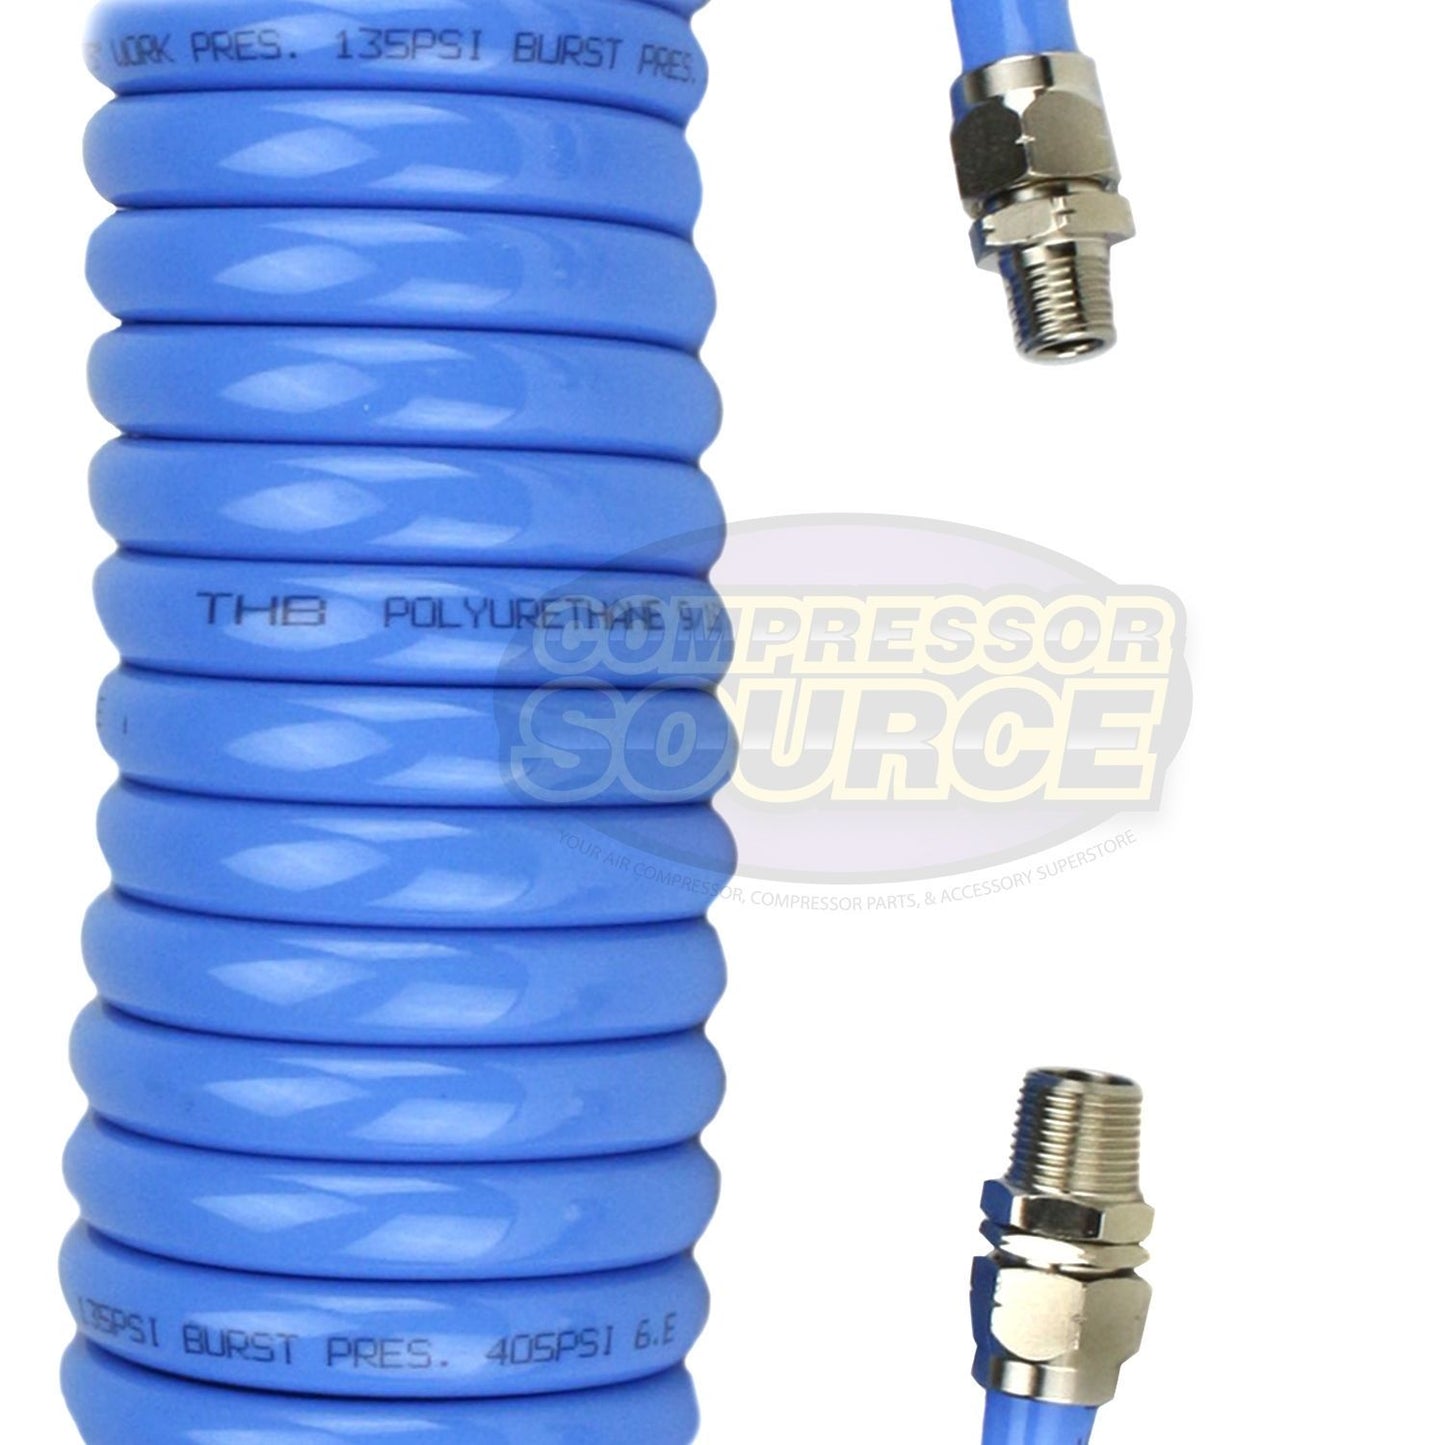 Premium 1/4" x 15' Air Compressor Coil Hose Coiled Polyurethane With Swivel Ends Blue